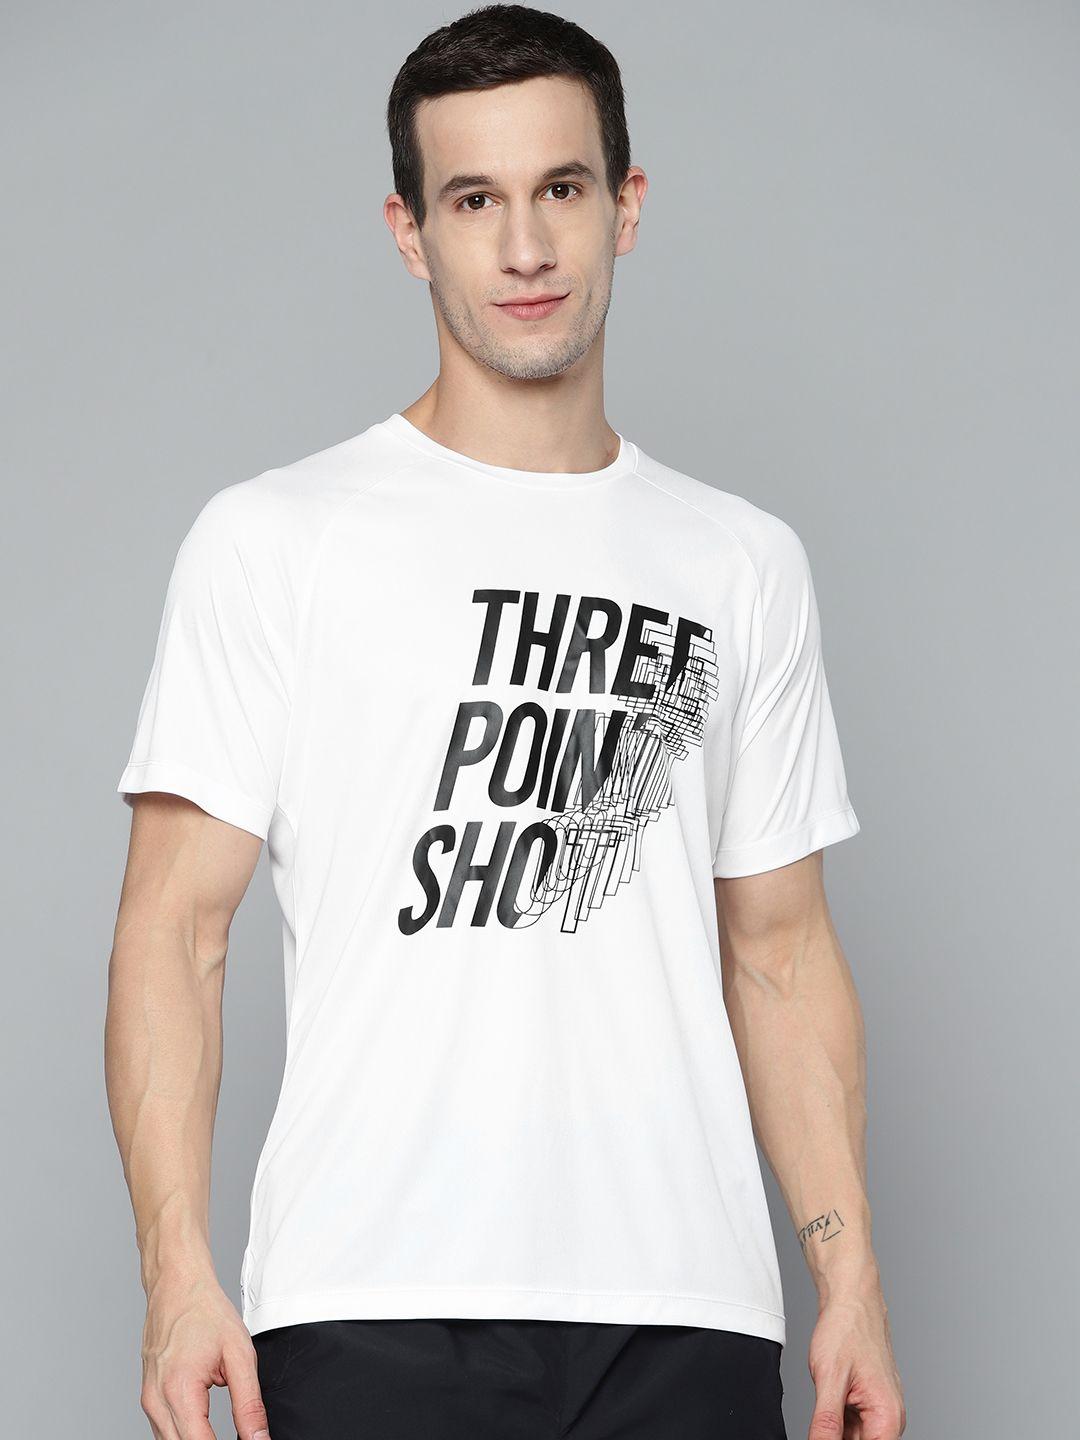 hrx by hrithik roshan basketball men optic white rapid-dry typography tshirts